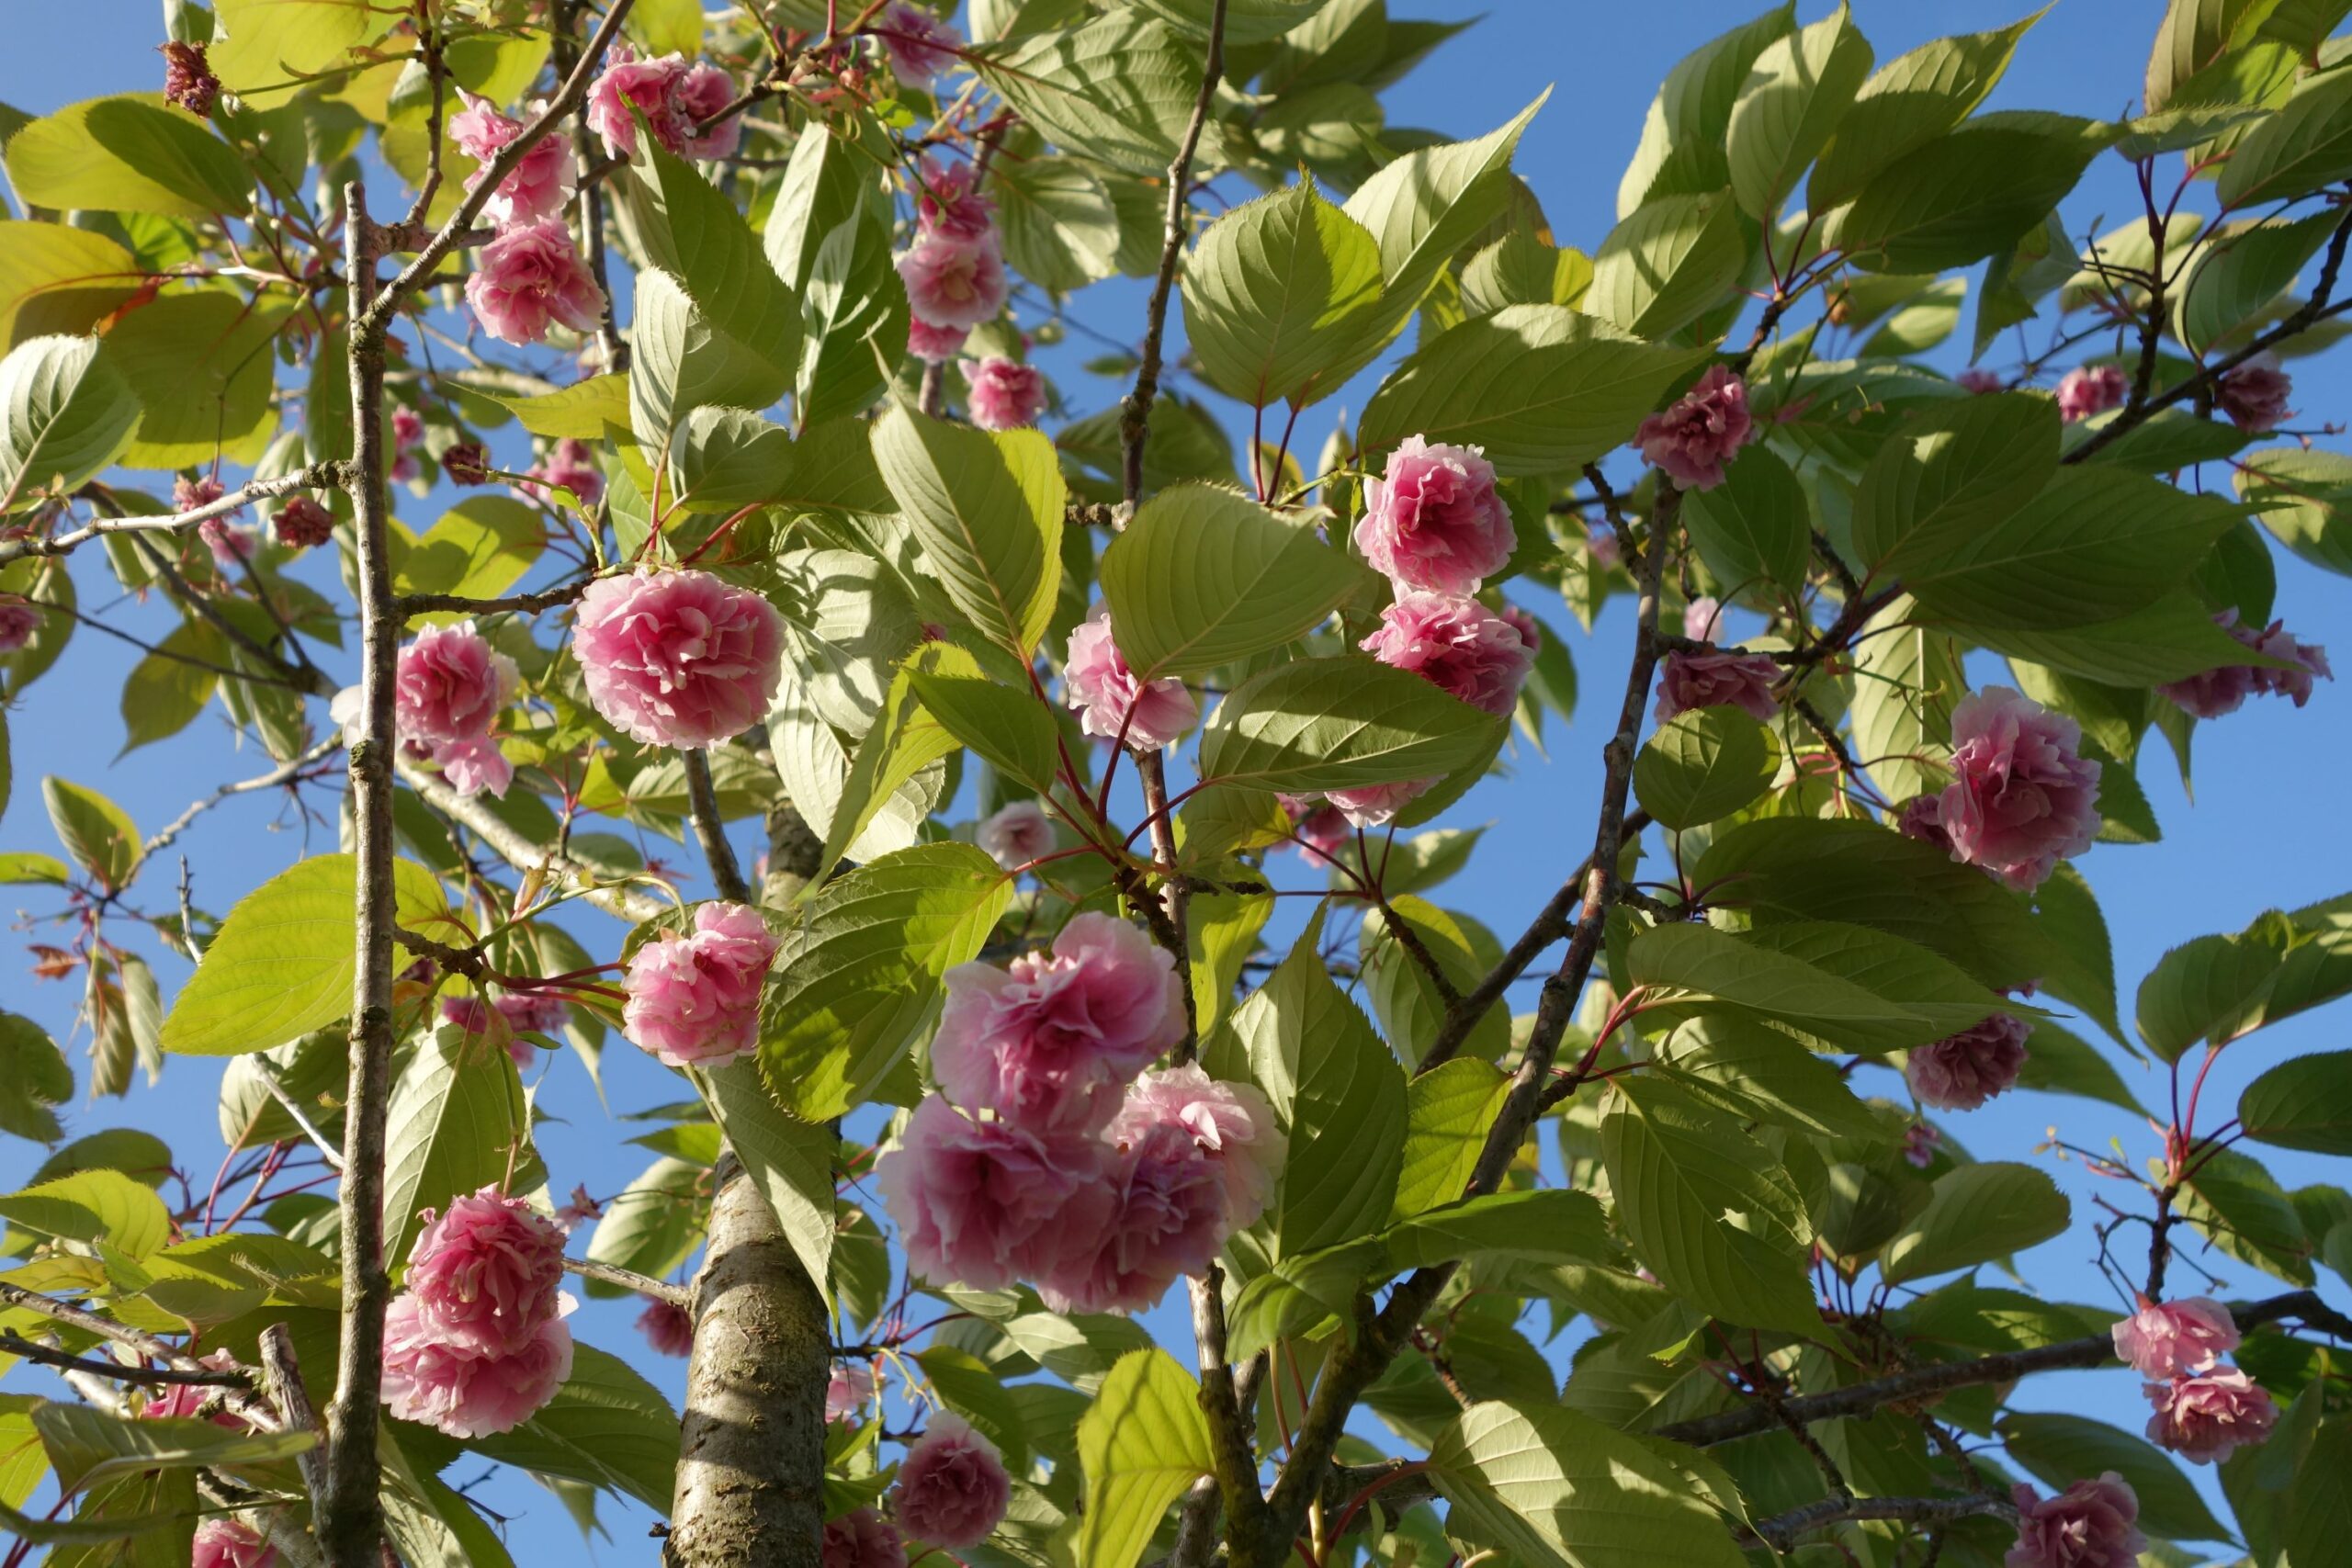 Prunus serrulata fugenzo Shirofugen pink flower blossoms and green leaves with blue sky. Credit Kevin Hobbs